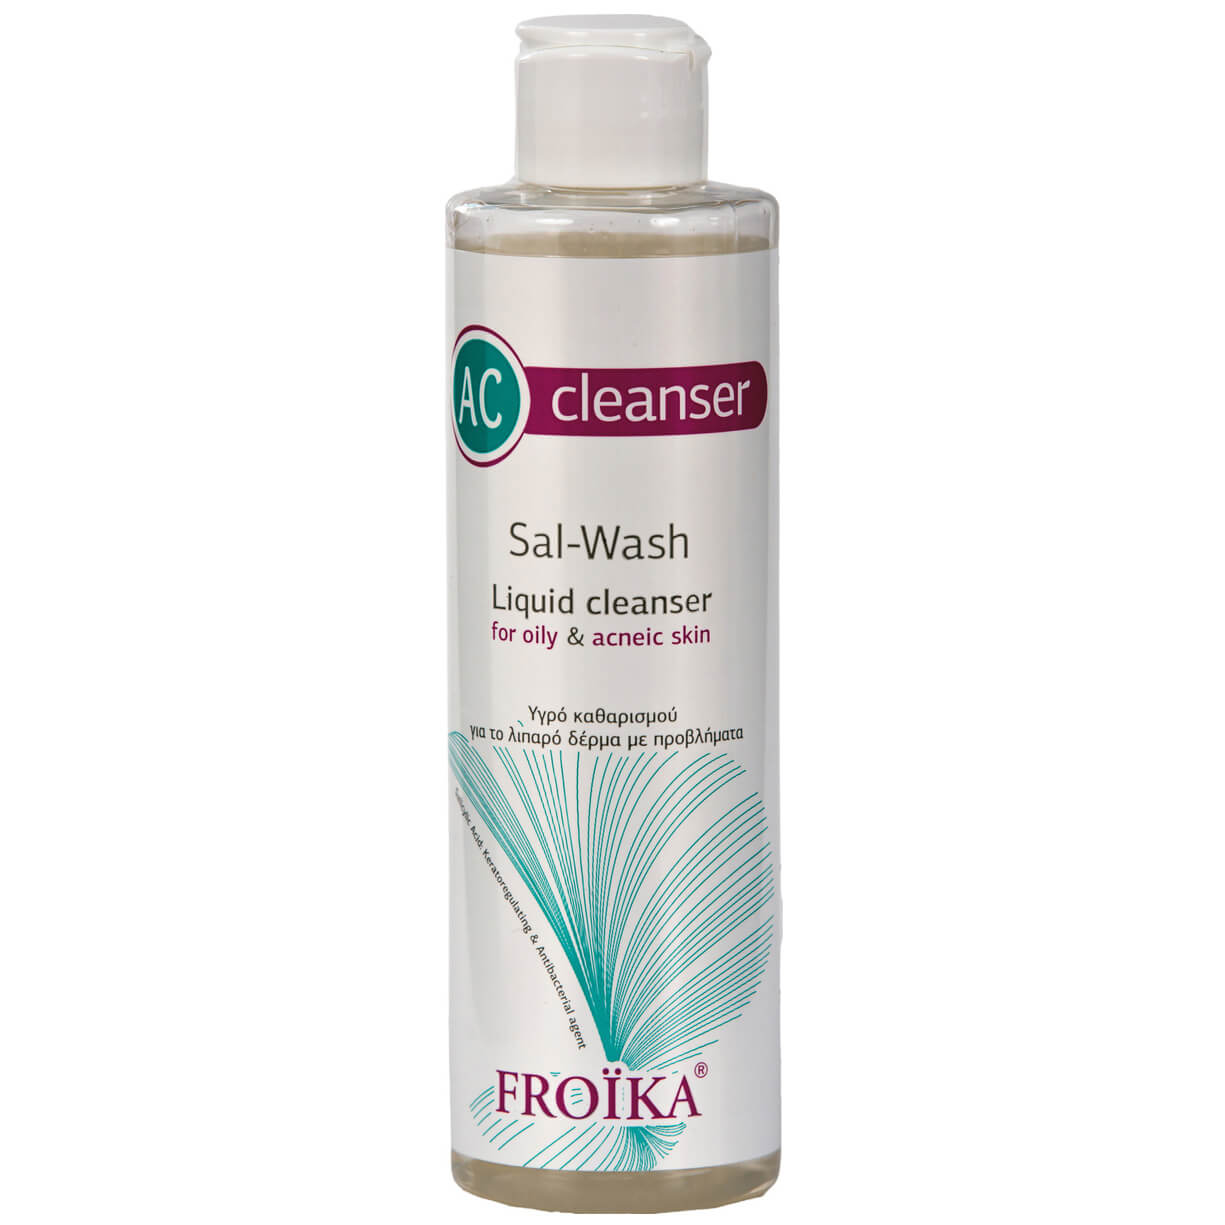 Froika Ac Sal Wash Cleanser Αφριστικό Καθαρισμού Με Σαλικυλικό Οξύ Ακμή 200ml 1753